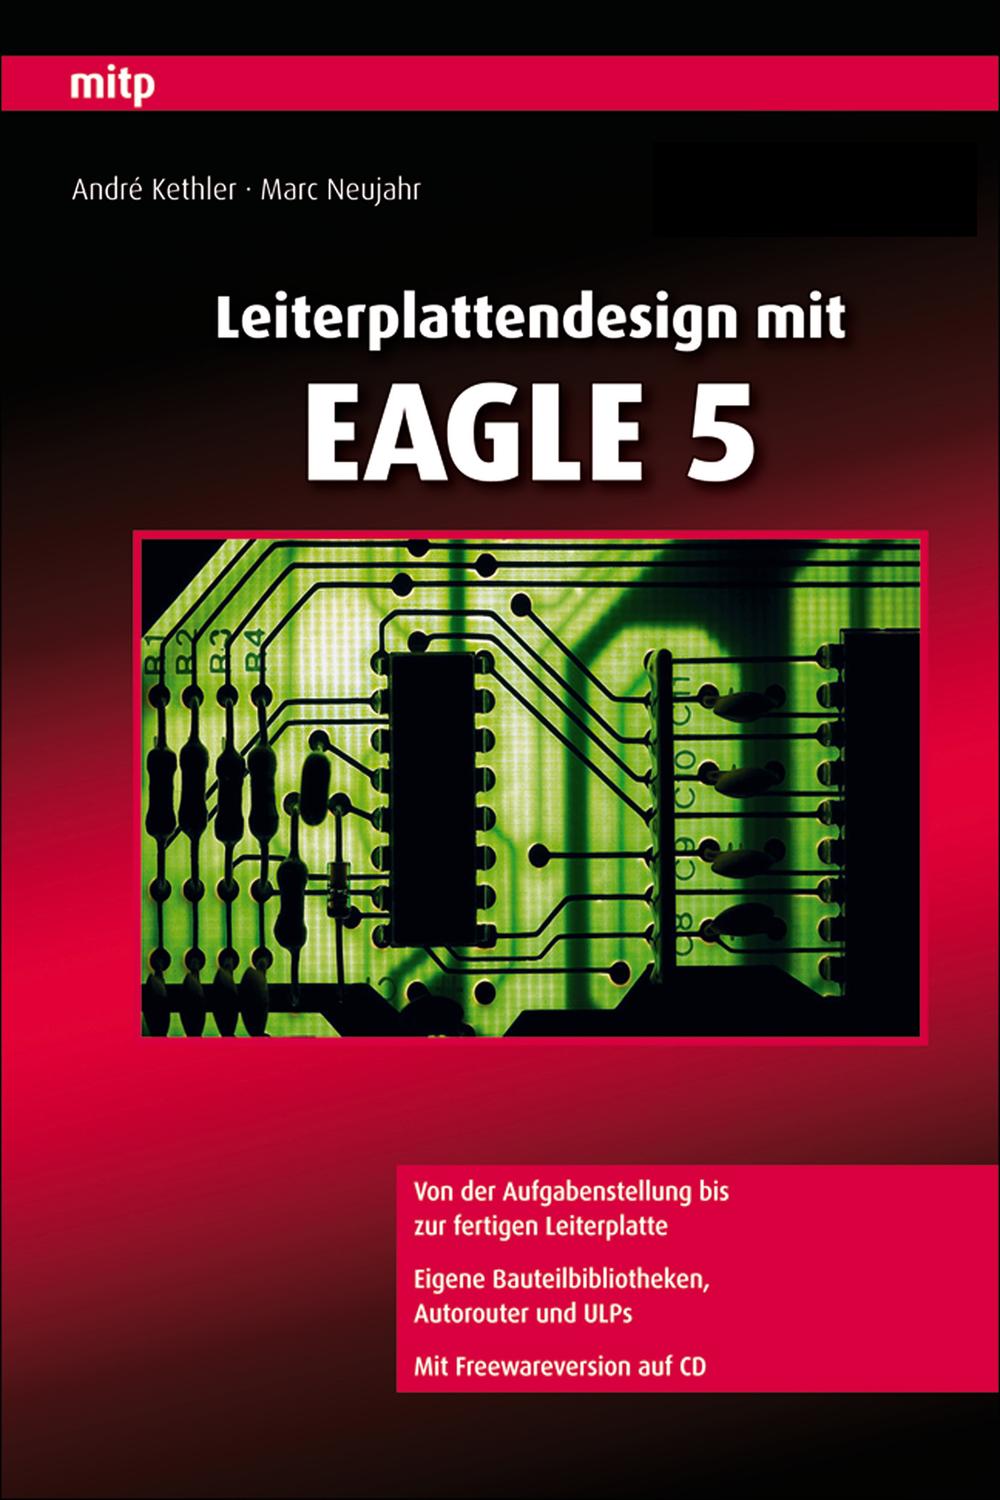 Leiterplattendesign mit EAGLE 5 - André Kethler, Marc Neujahr